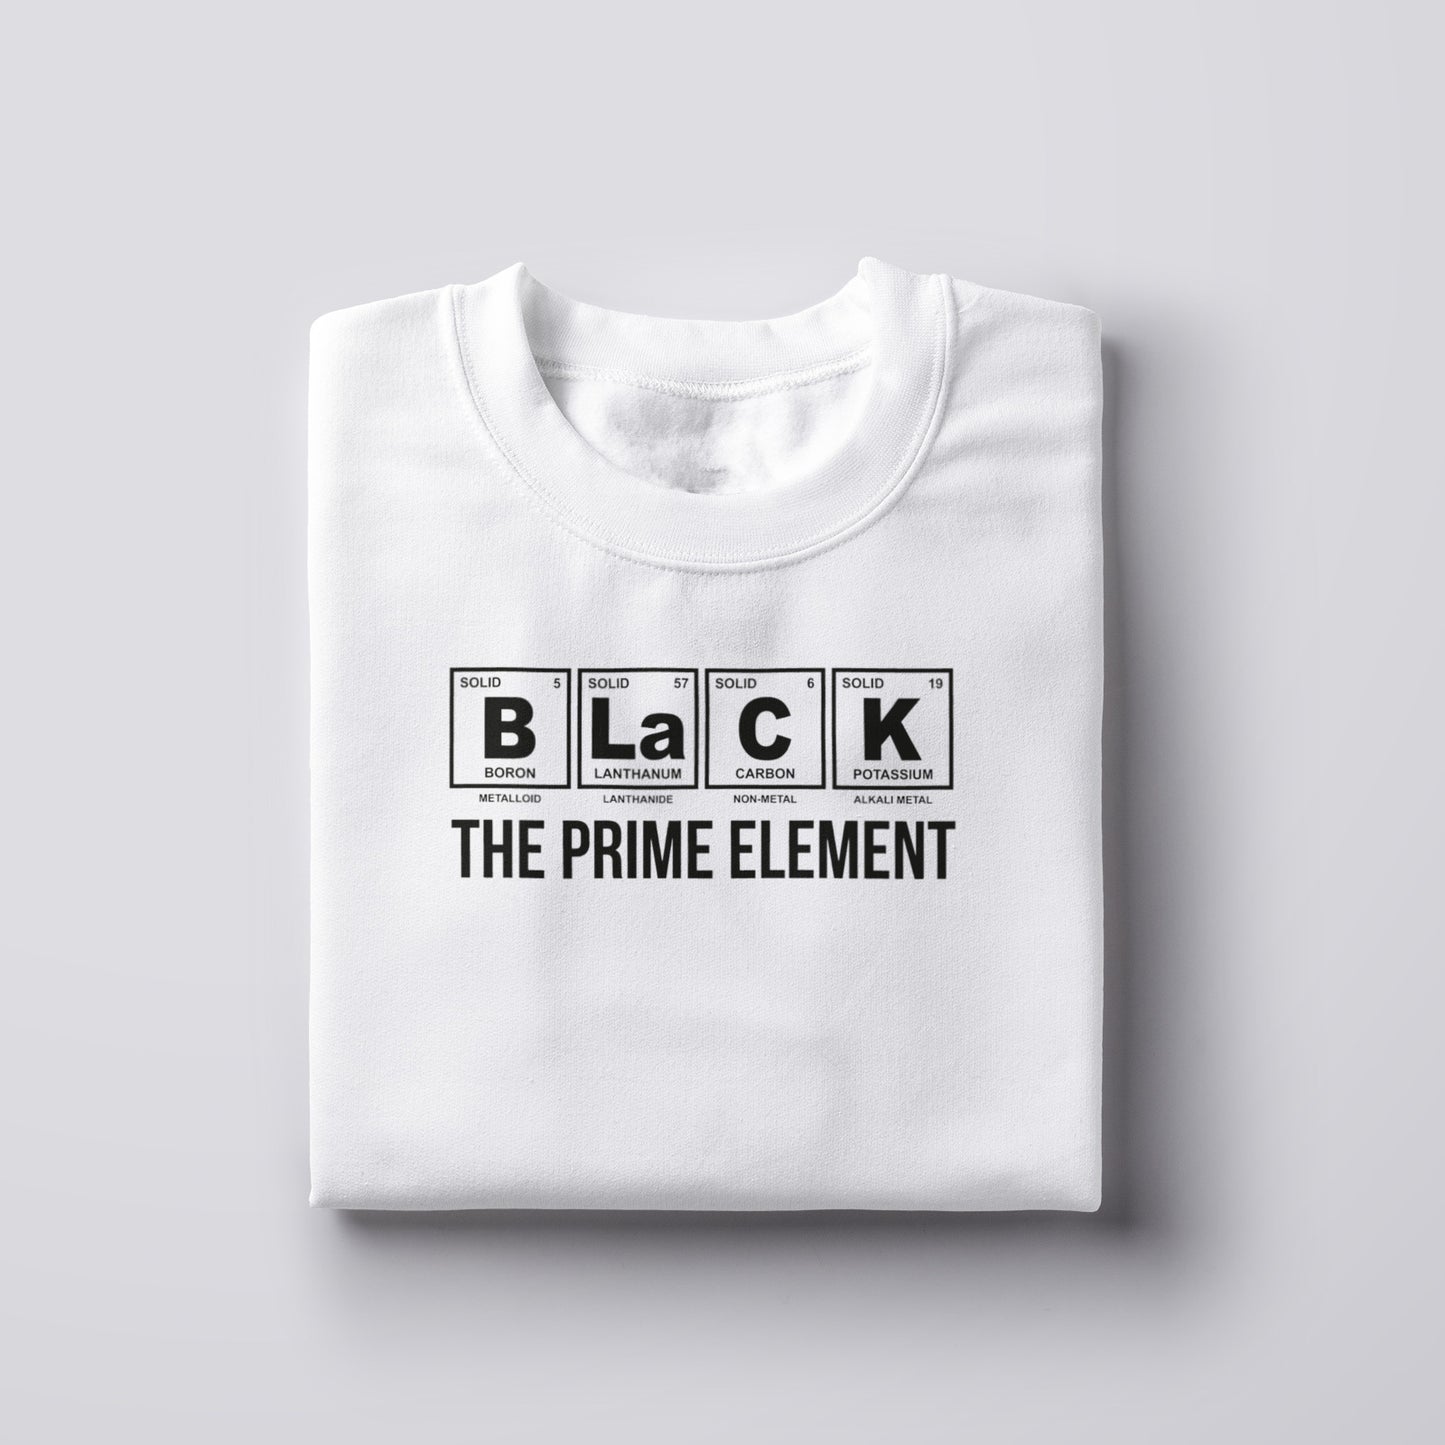 Black The Prime Element